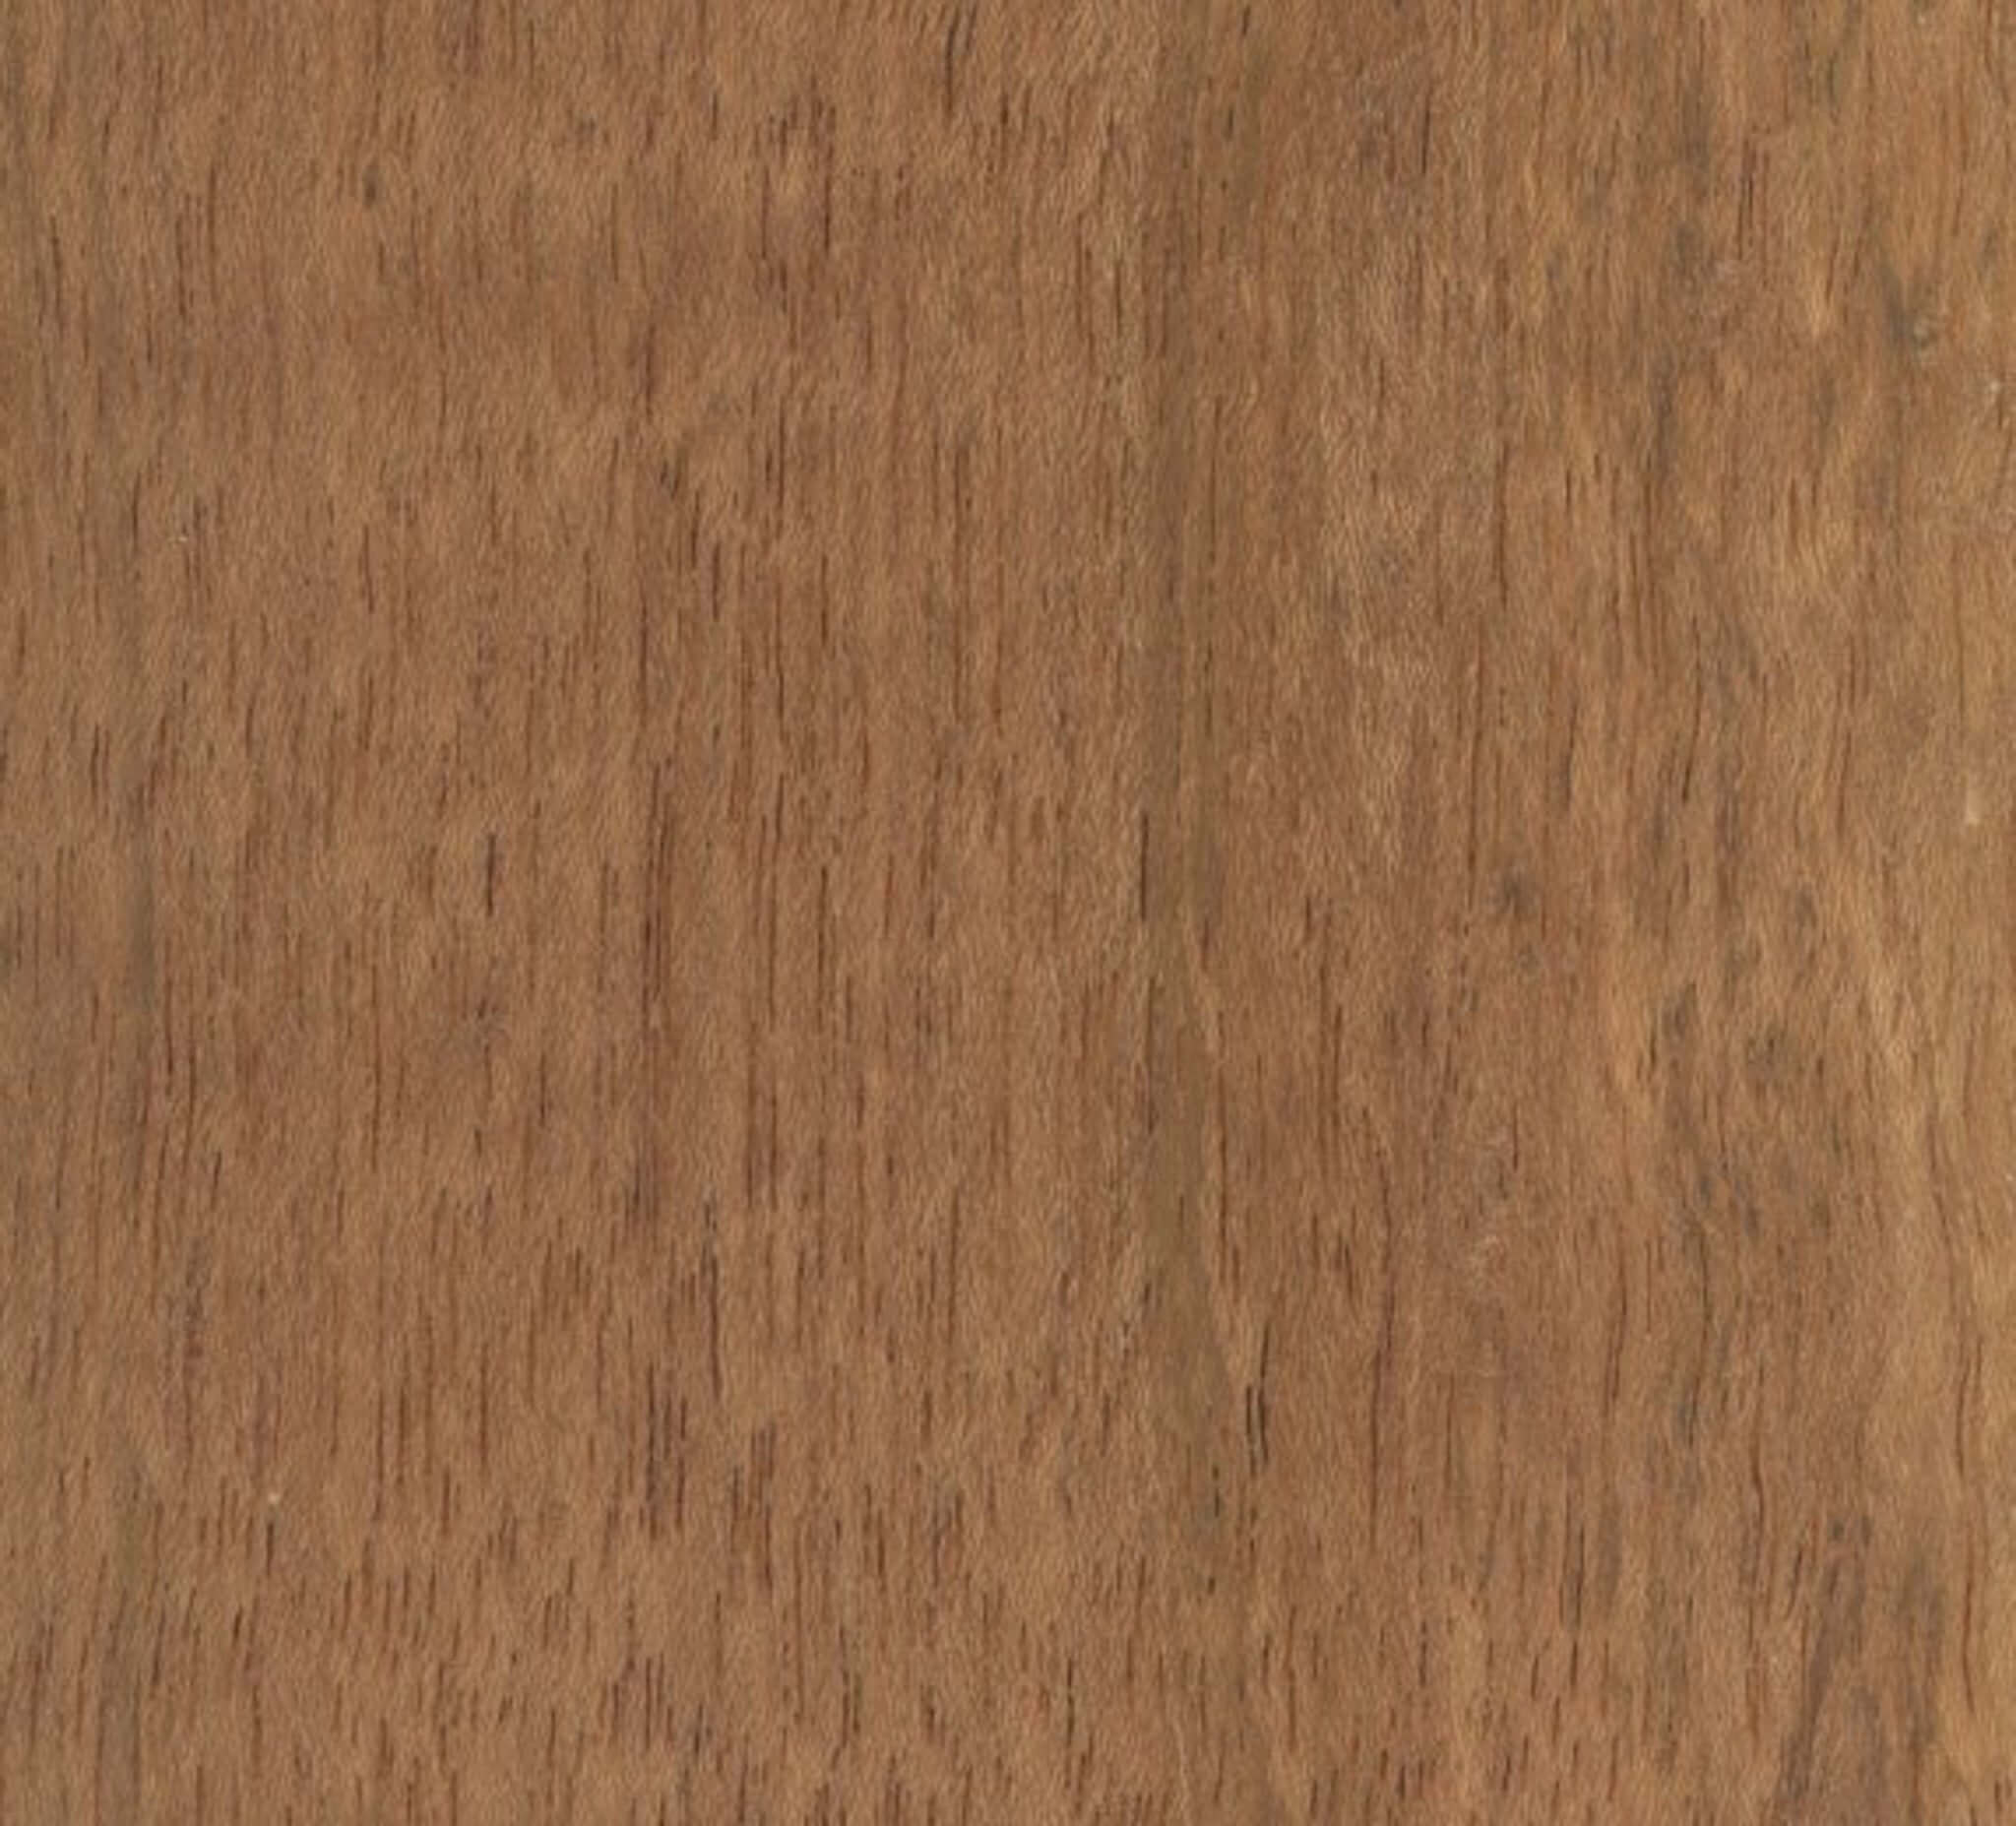 a sample of jatoba wood